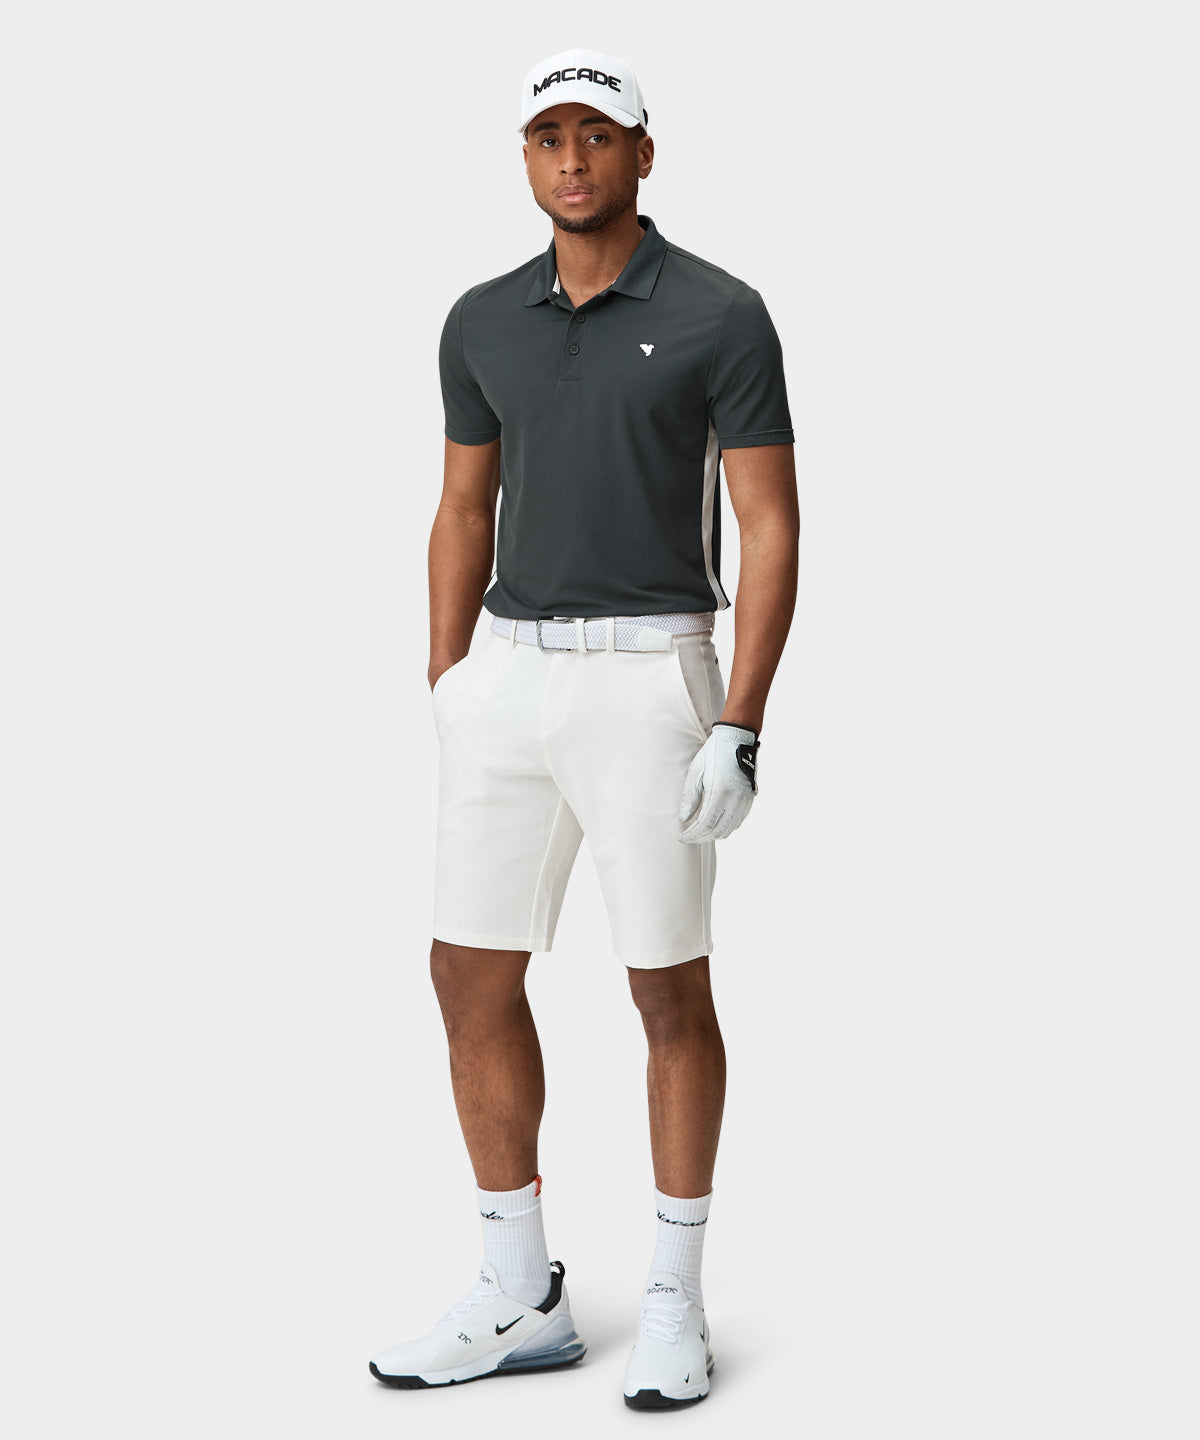 Nash Pebble Pro Shirt Macade Golf